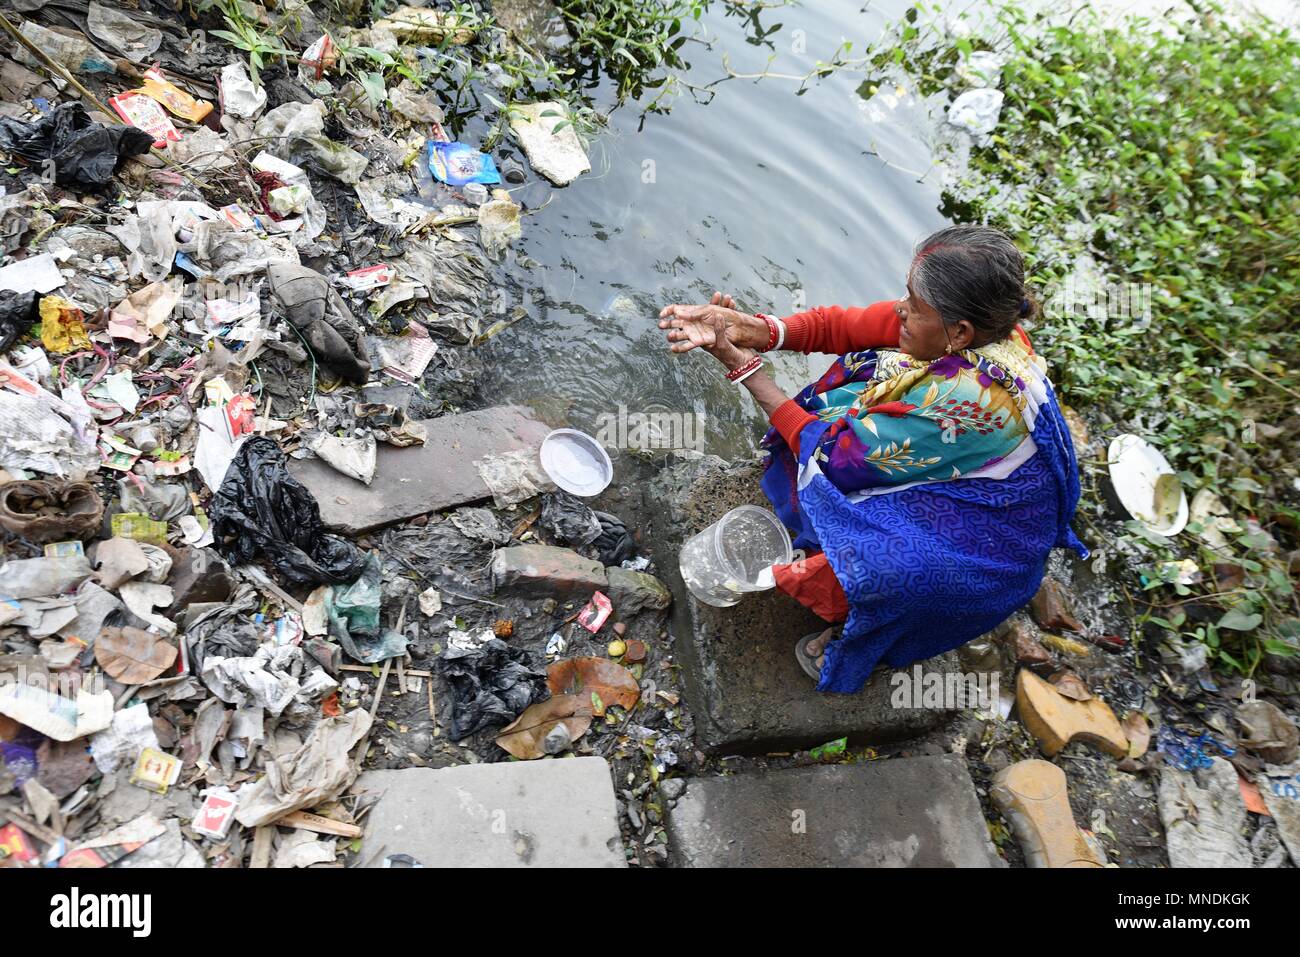 A poverty scene in Kolkata (Calcutta), India      Photo © Jacopo Emma/Sintesi/Alamy Stock Photo Stock Photo